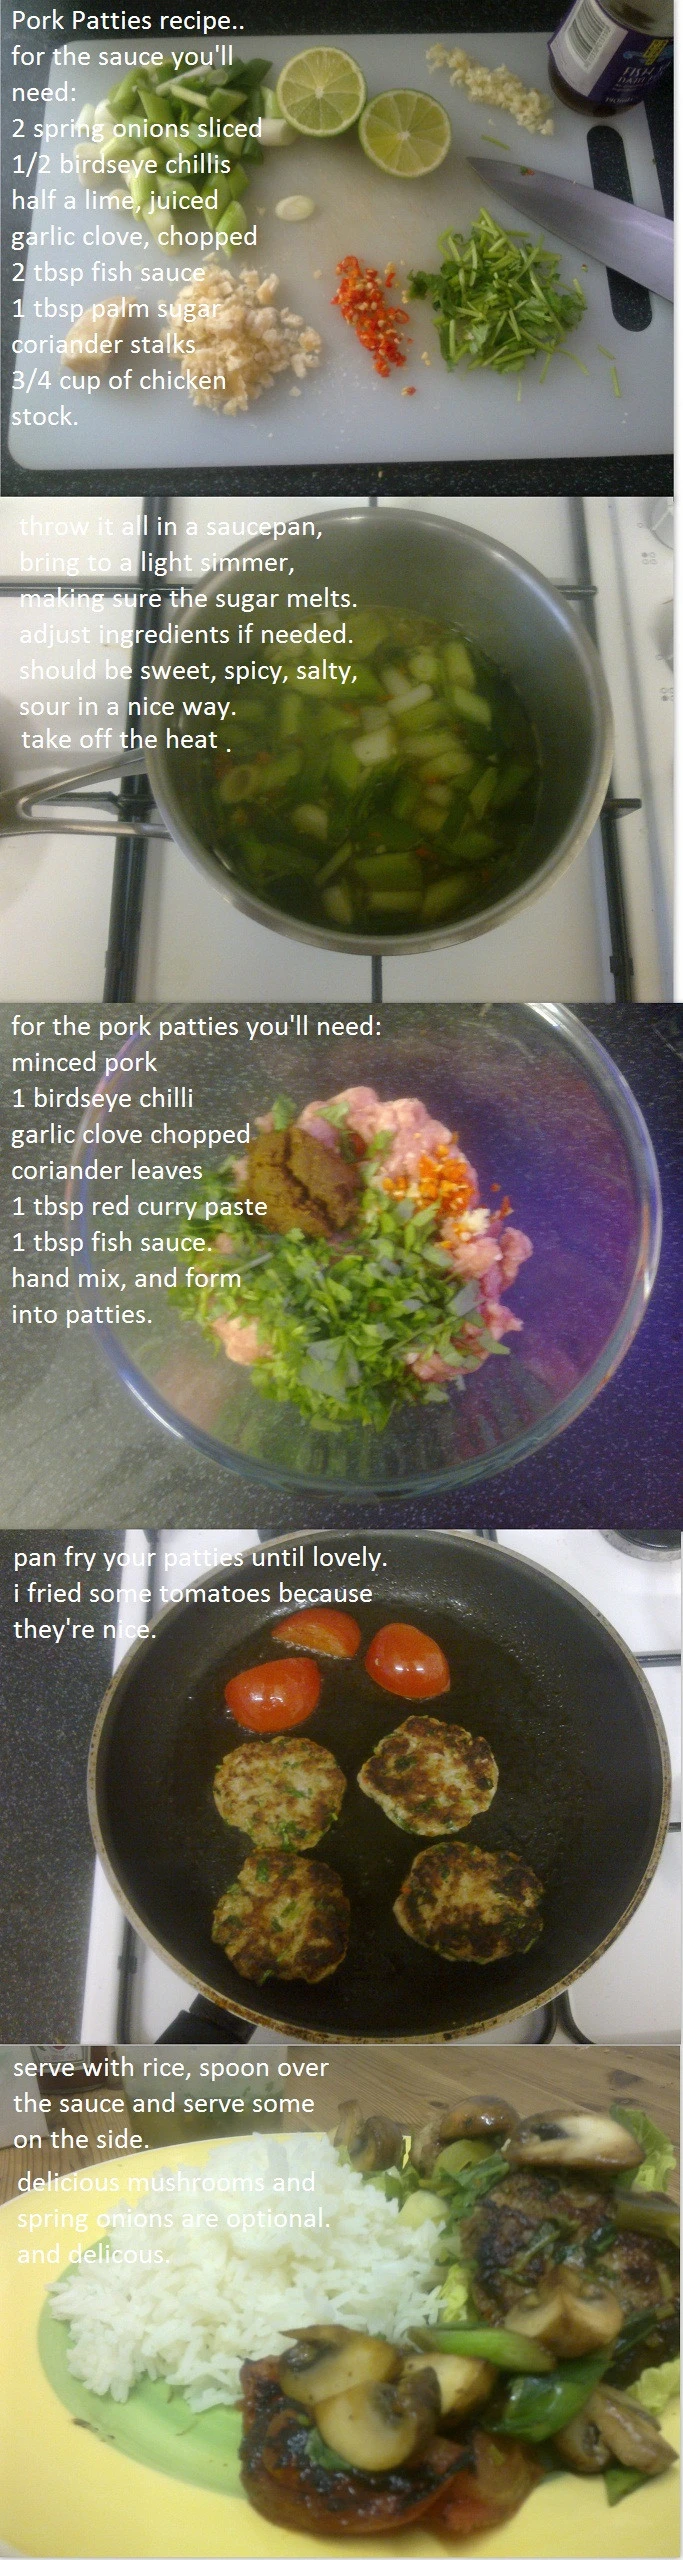 /fit/ recipe - Pork Patties